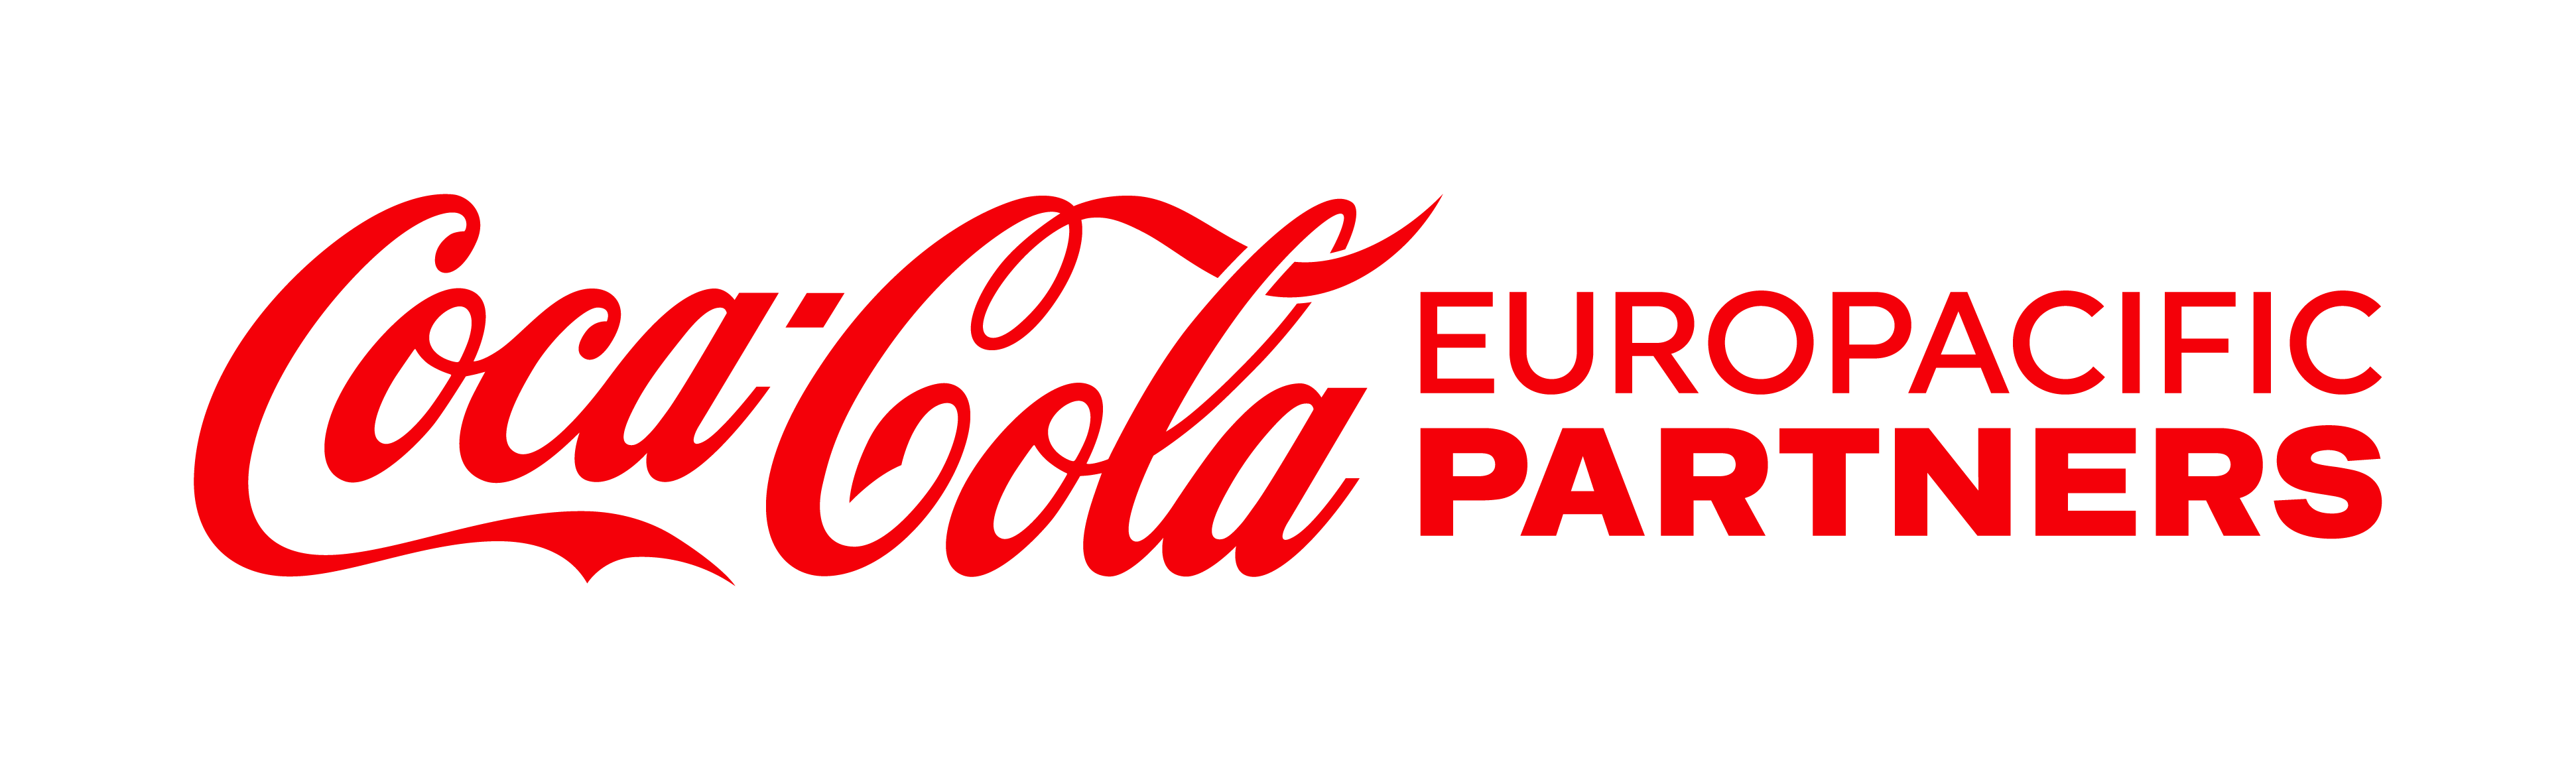 Coca Cola Europacific Partners 